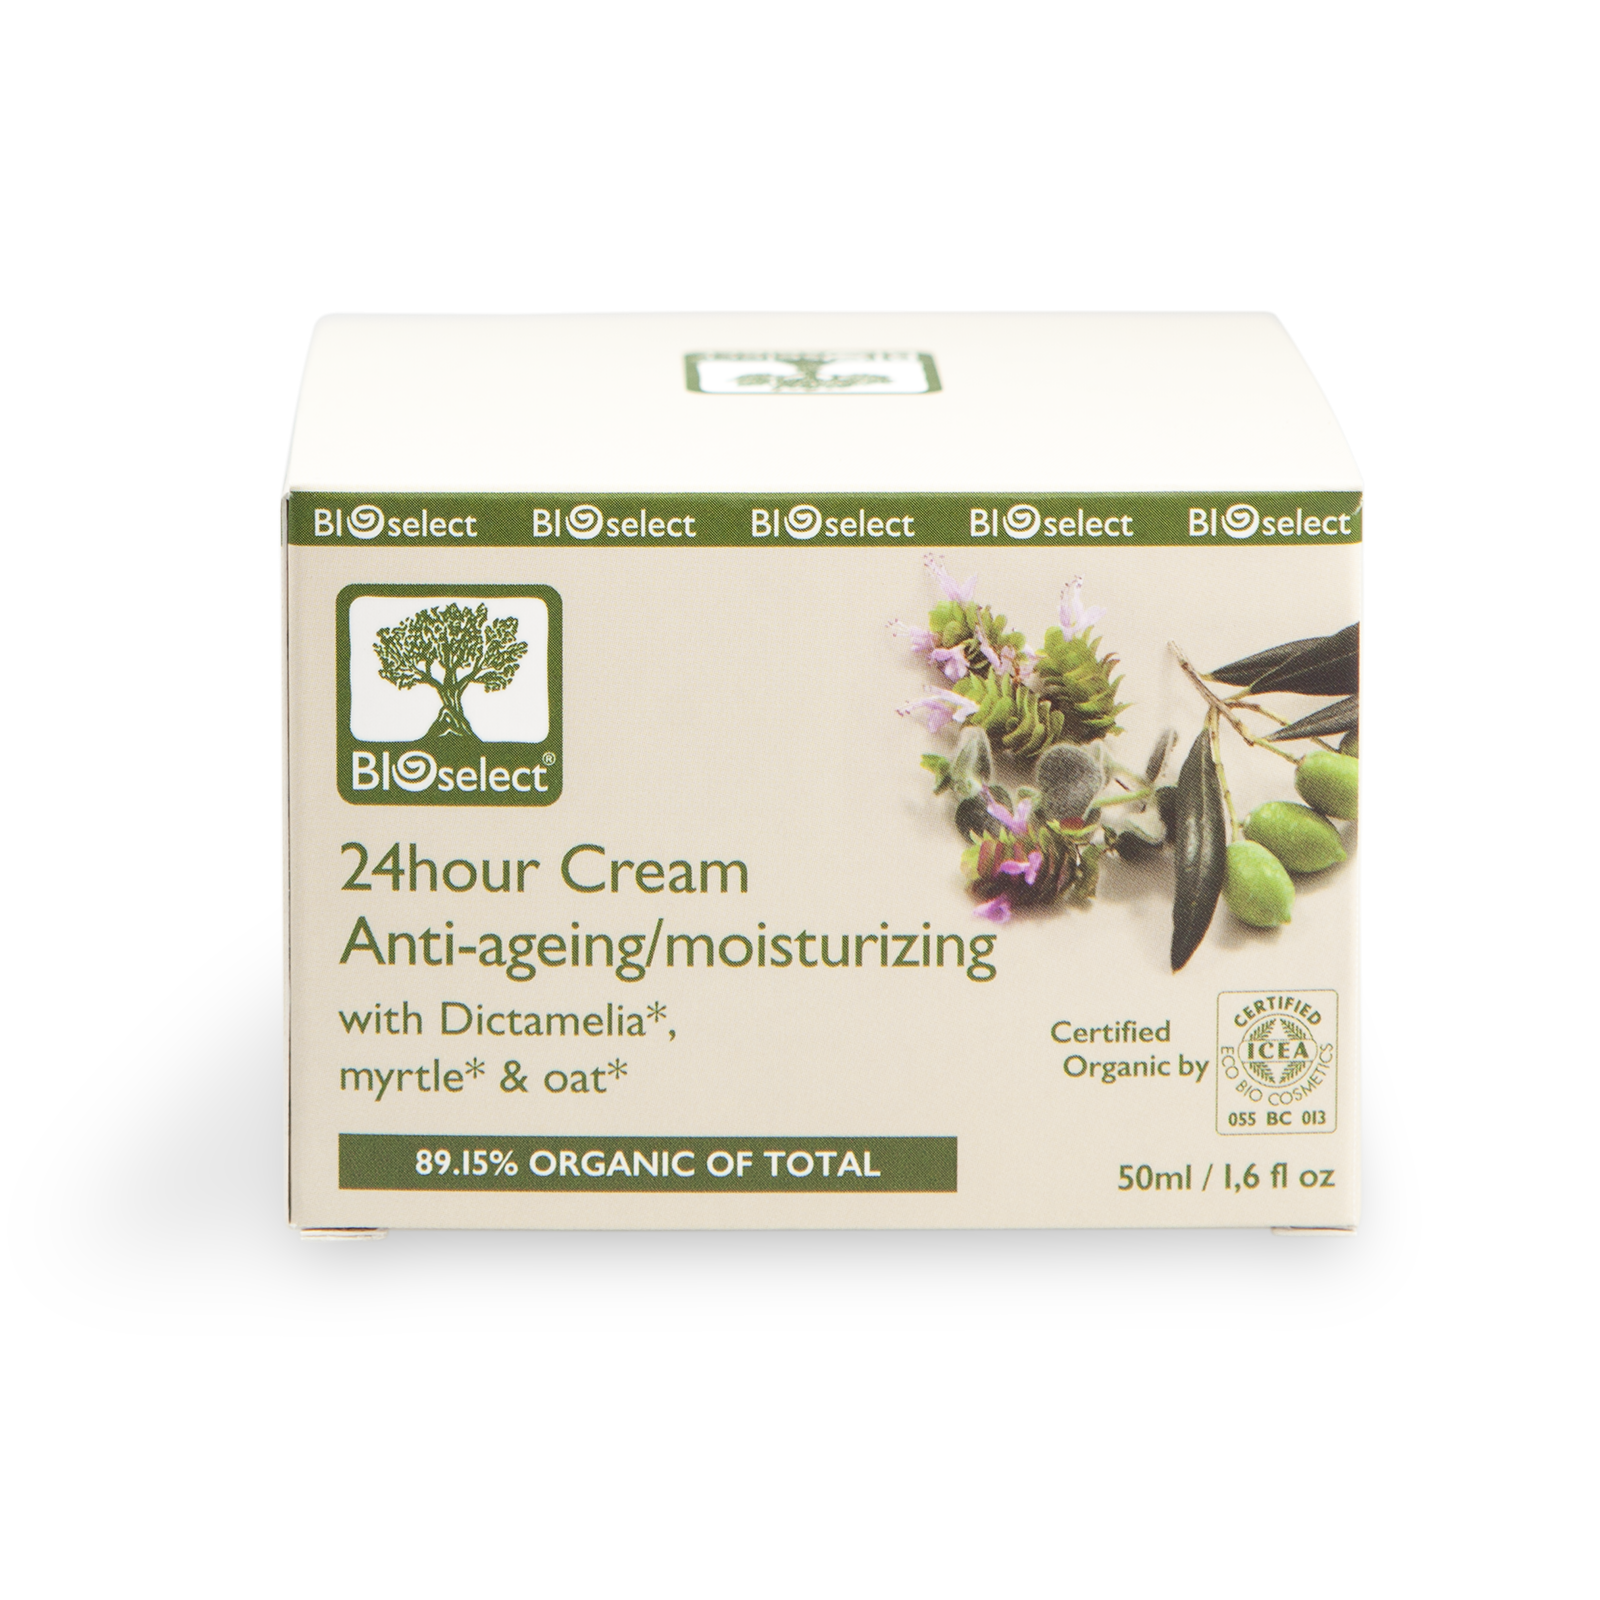 Bioselect 24hour Cream Anti-ageing/moisturizing